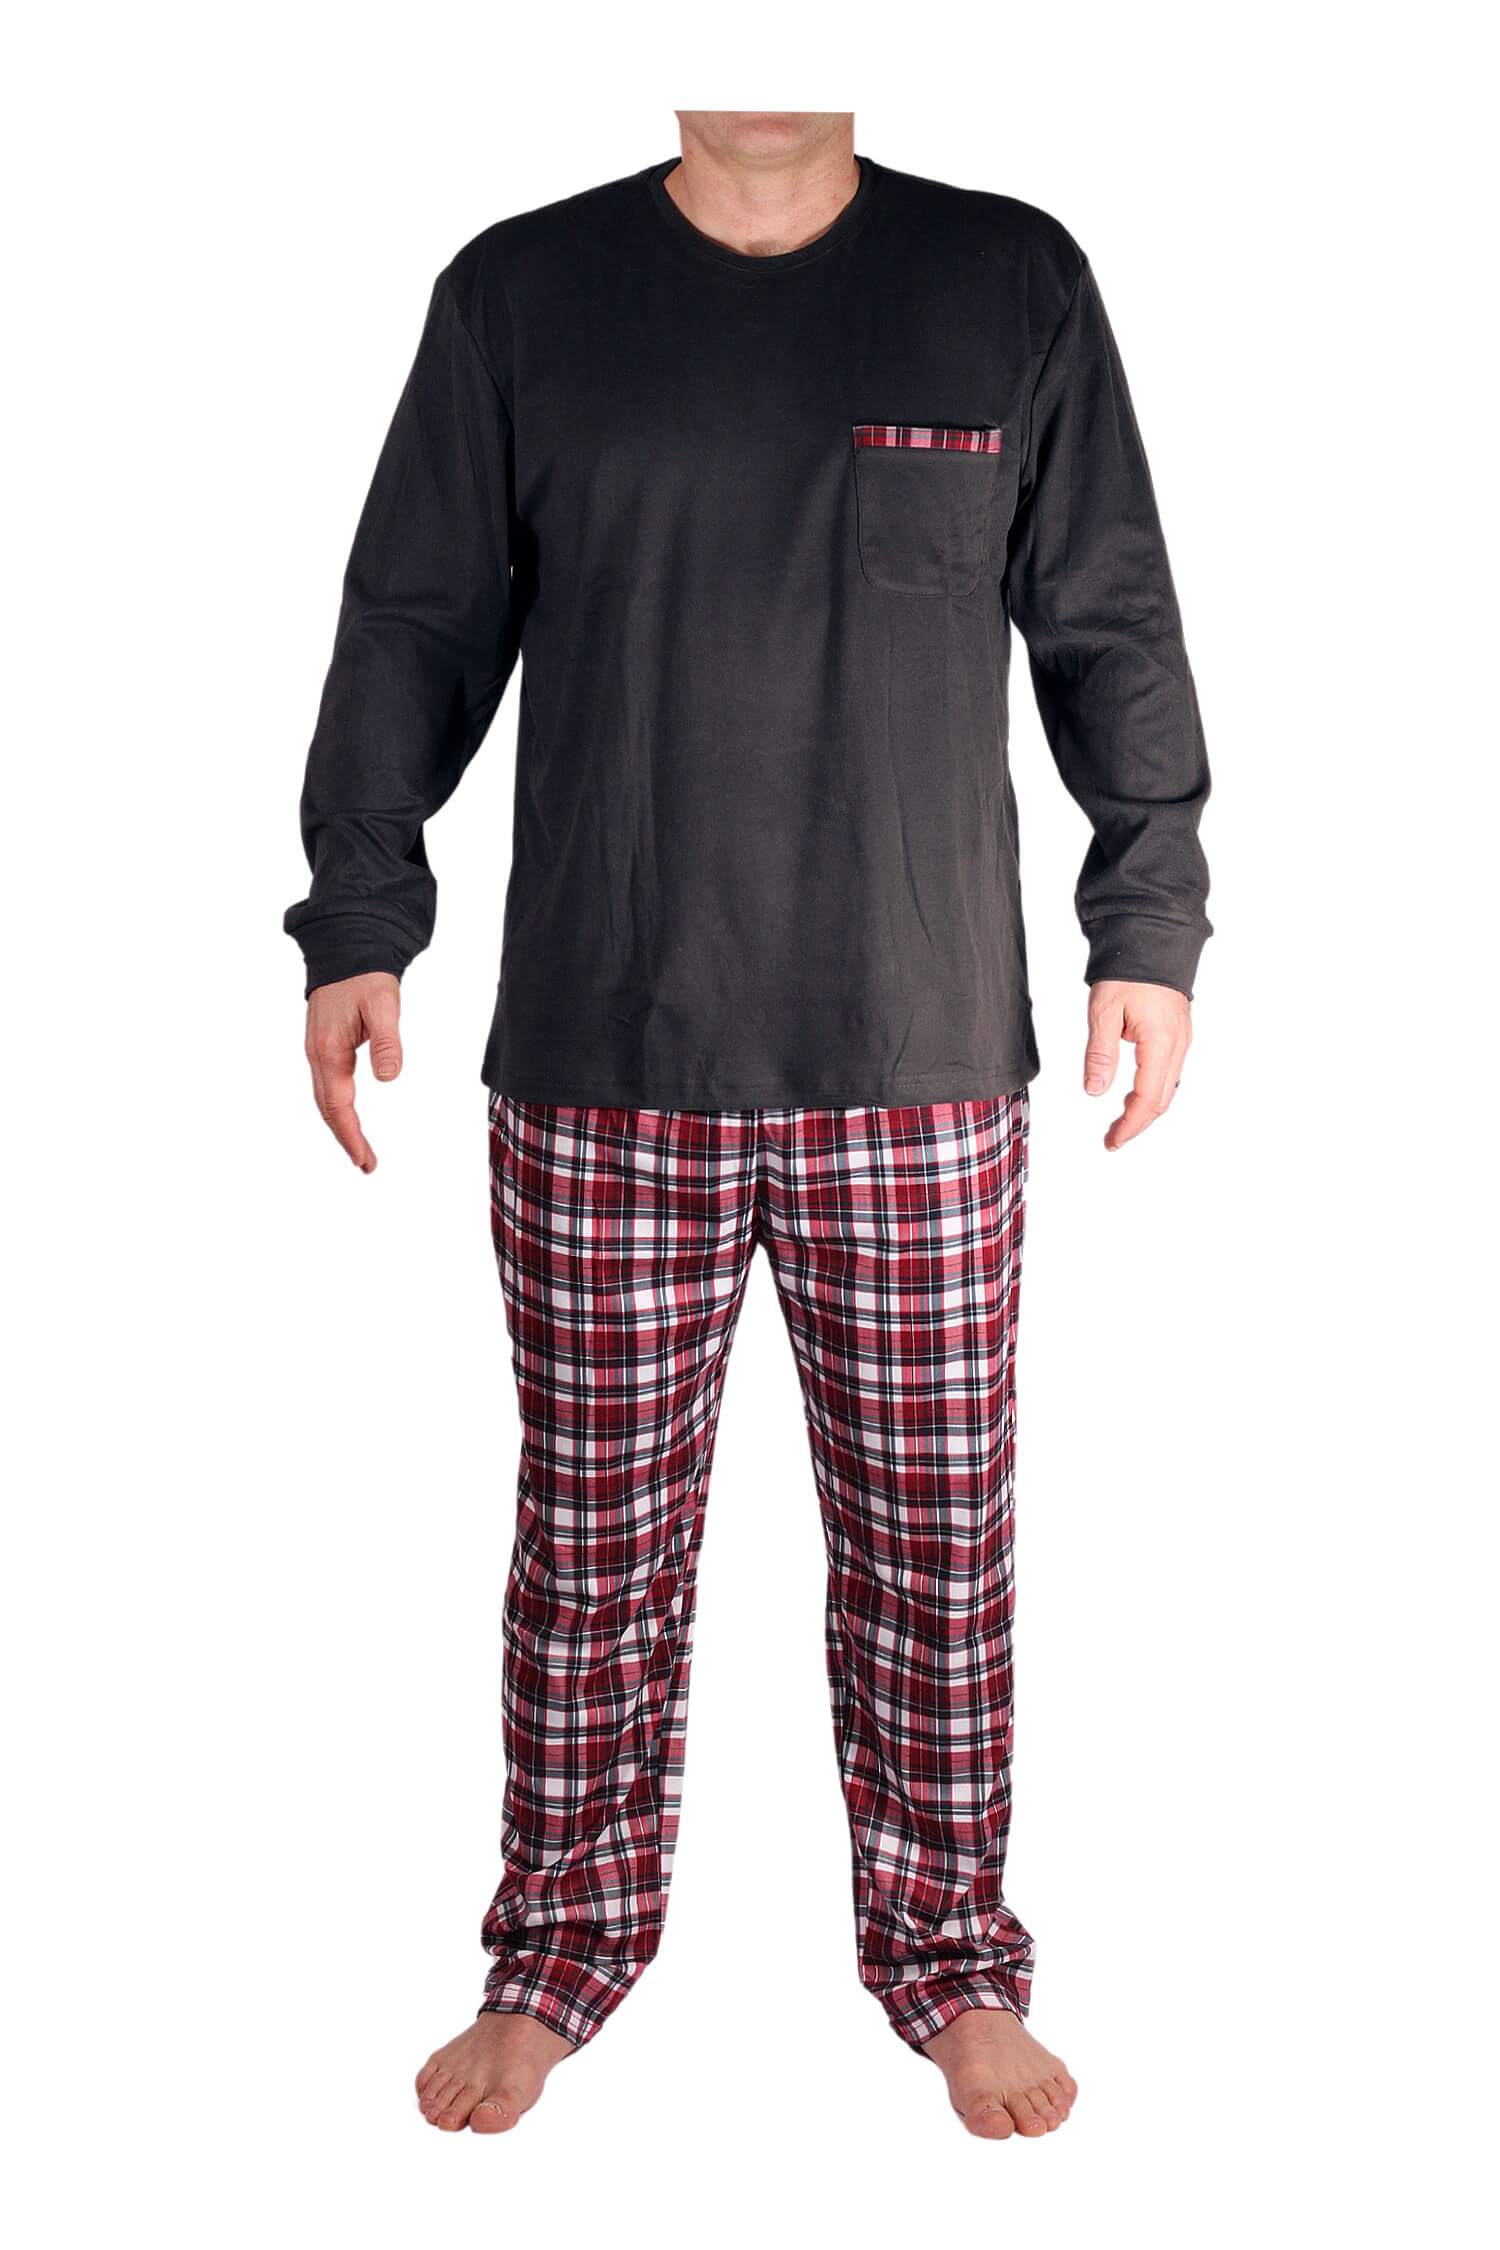 Zdenda Lux pánské pyžamo s flísem XL tmavě šedá